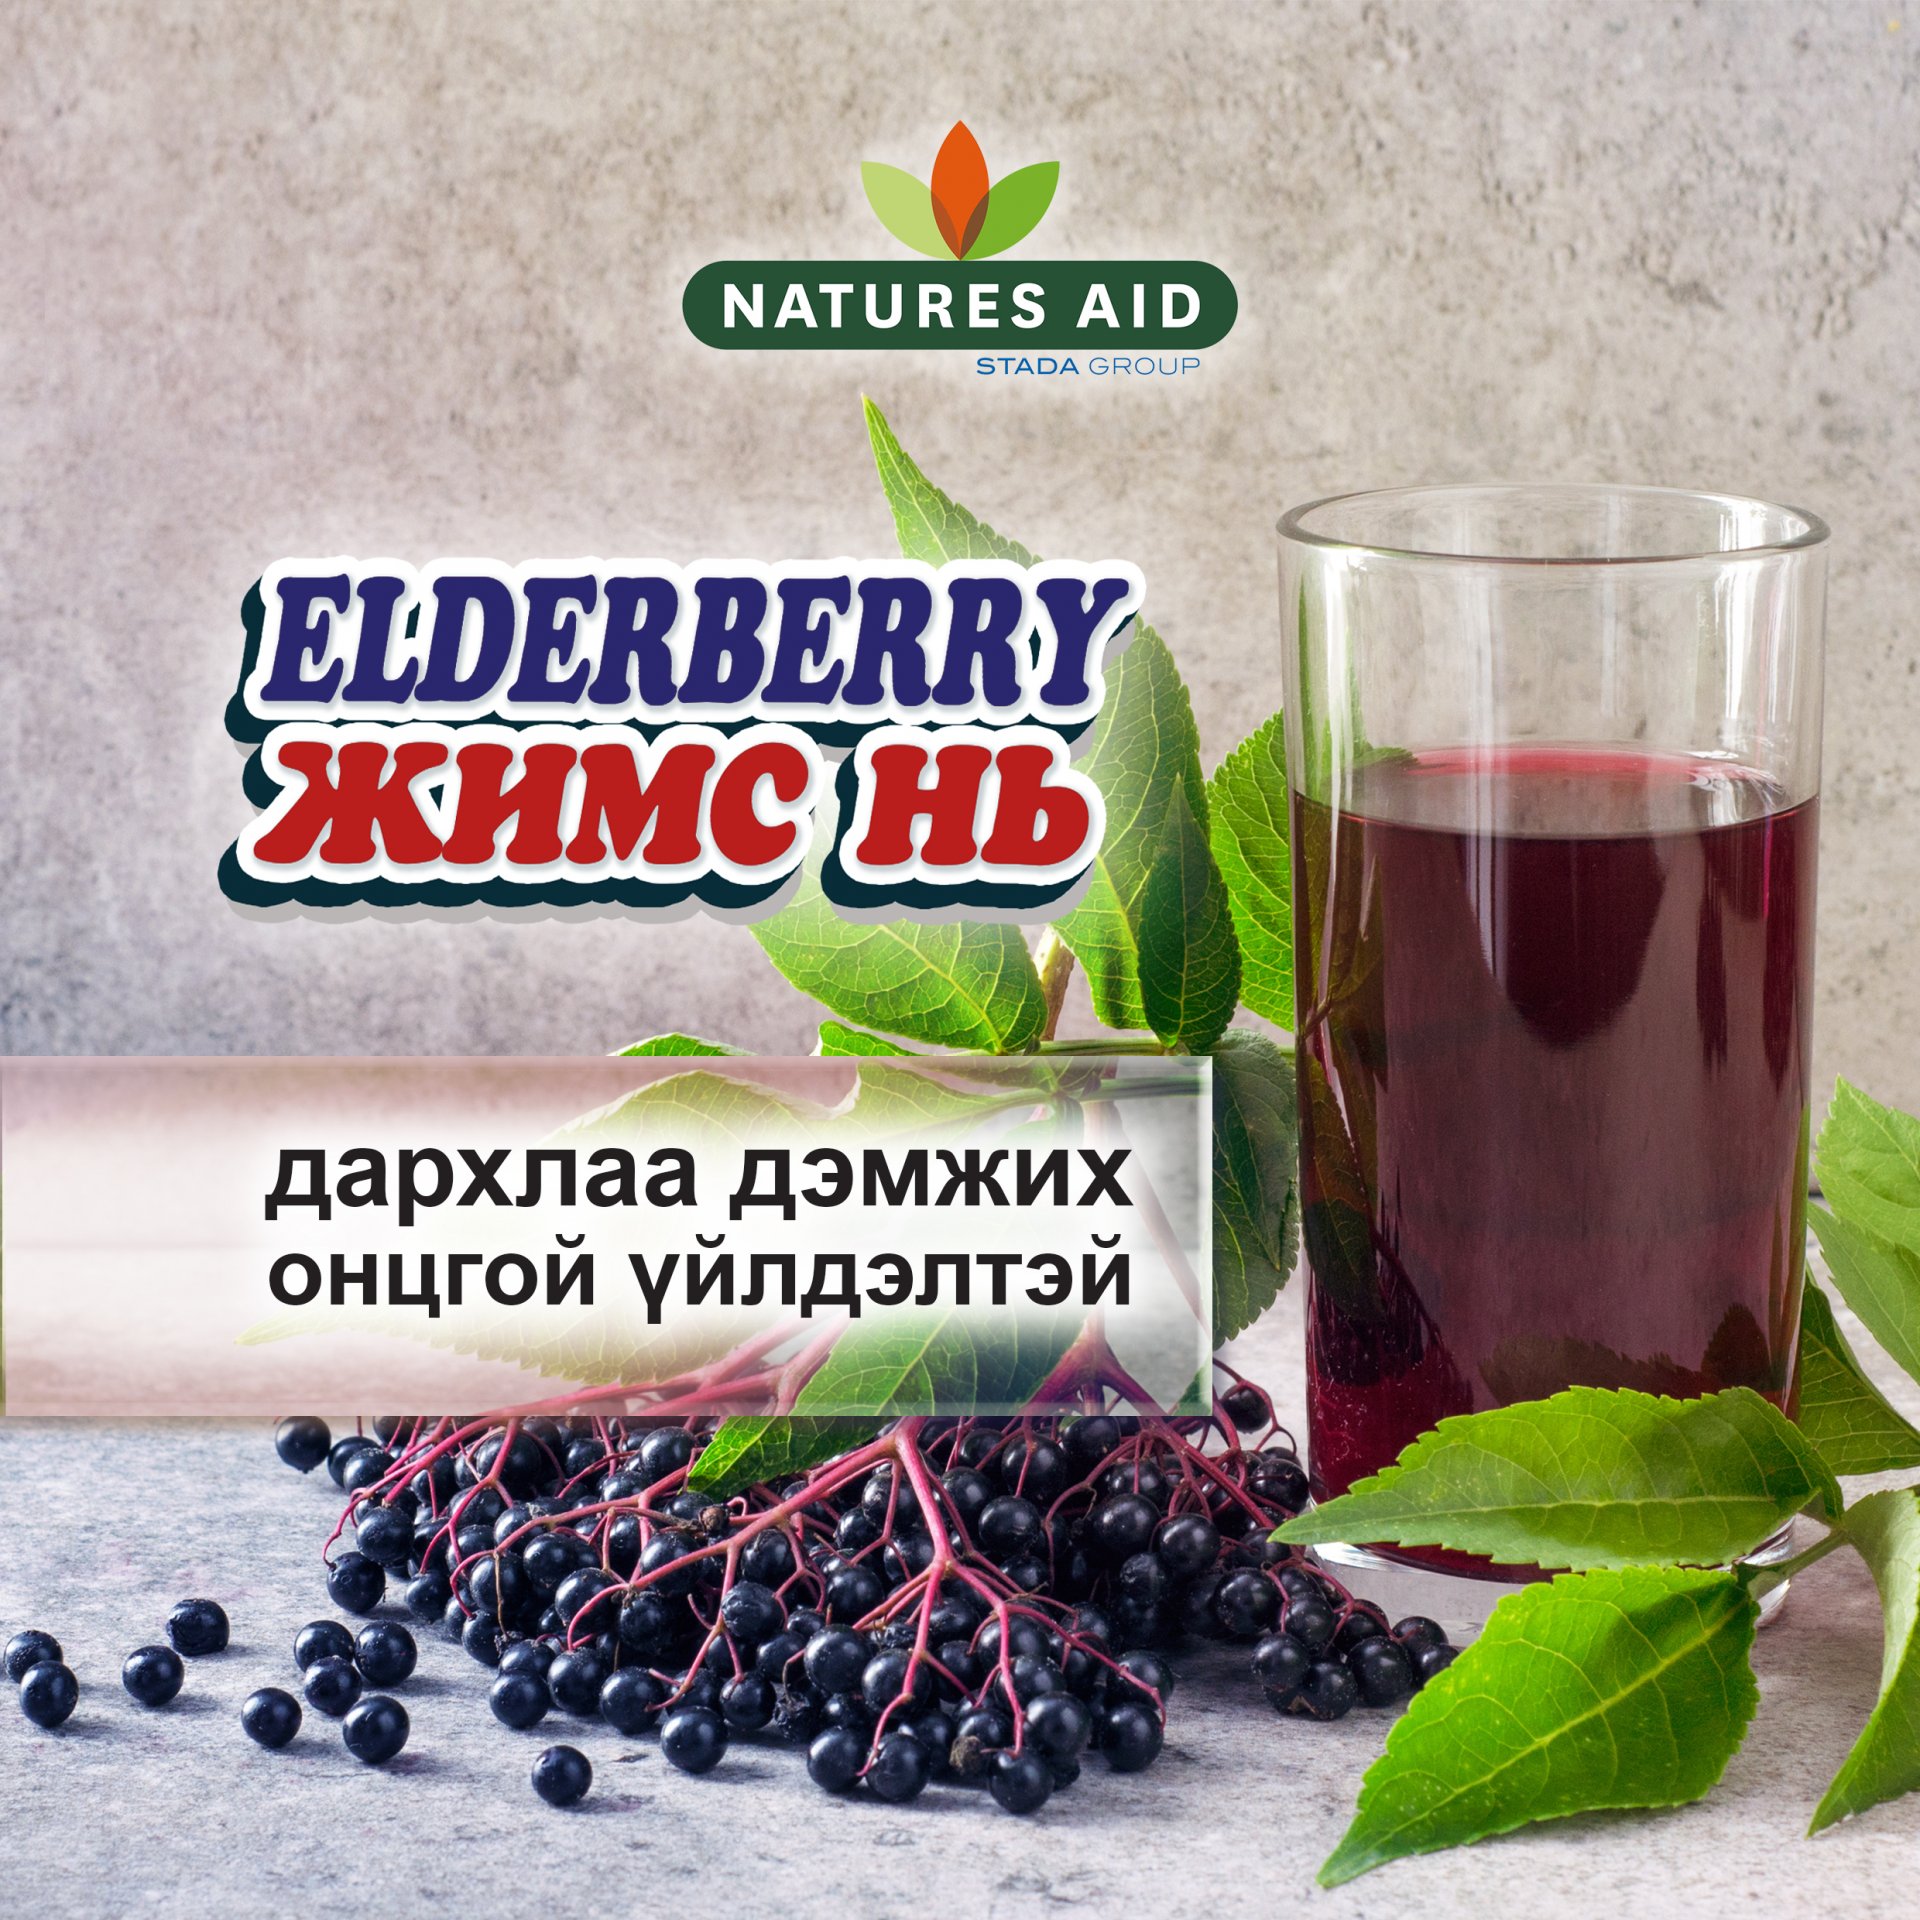 Elderberry жимсний 5 ач холбогдол